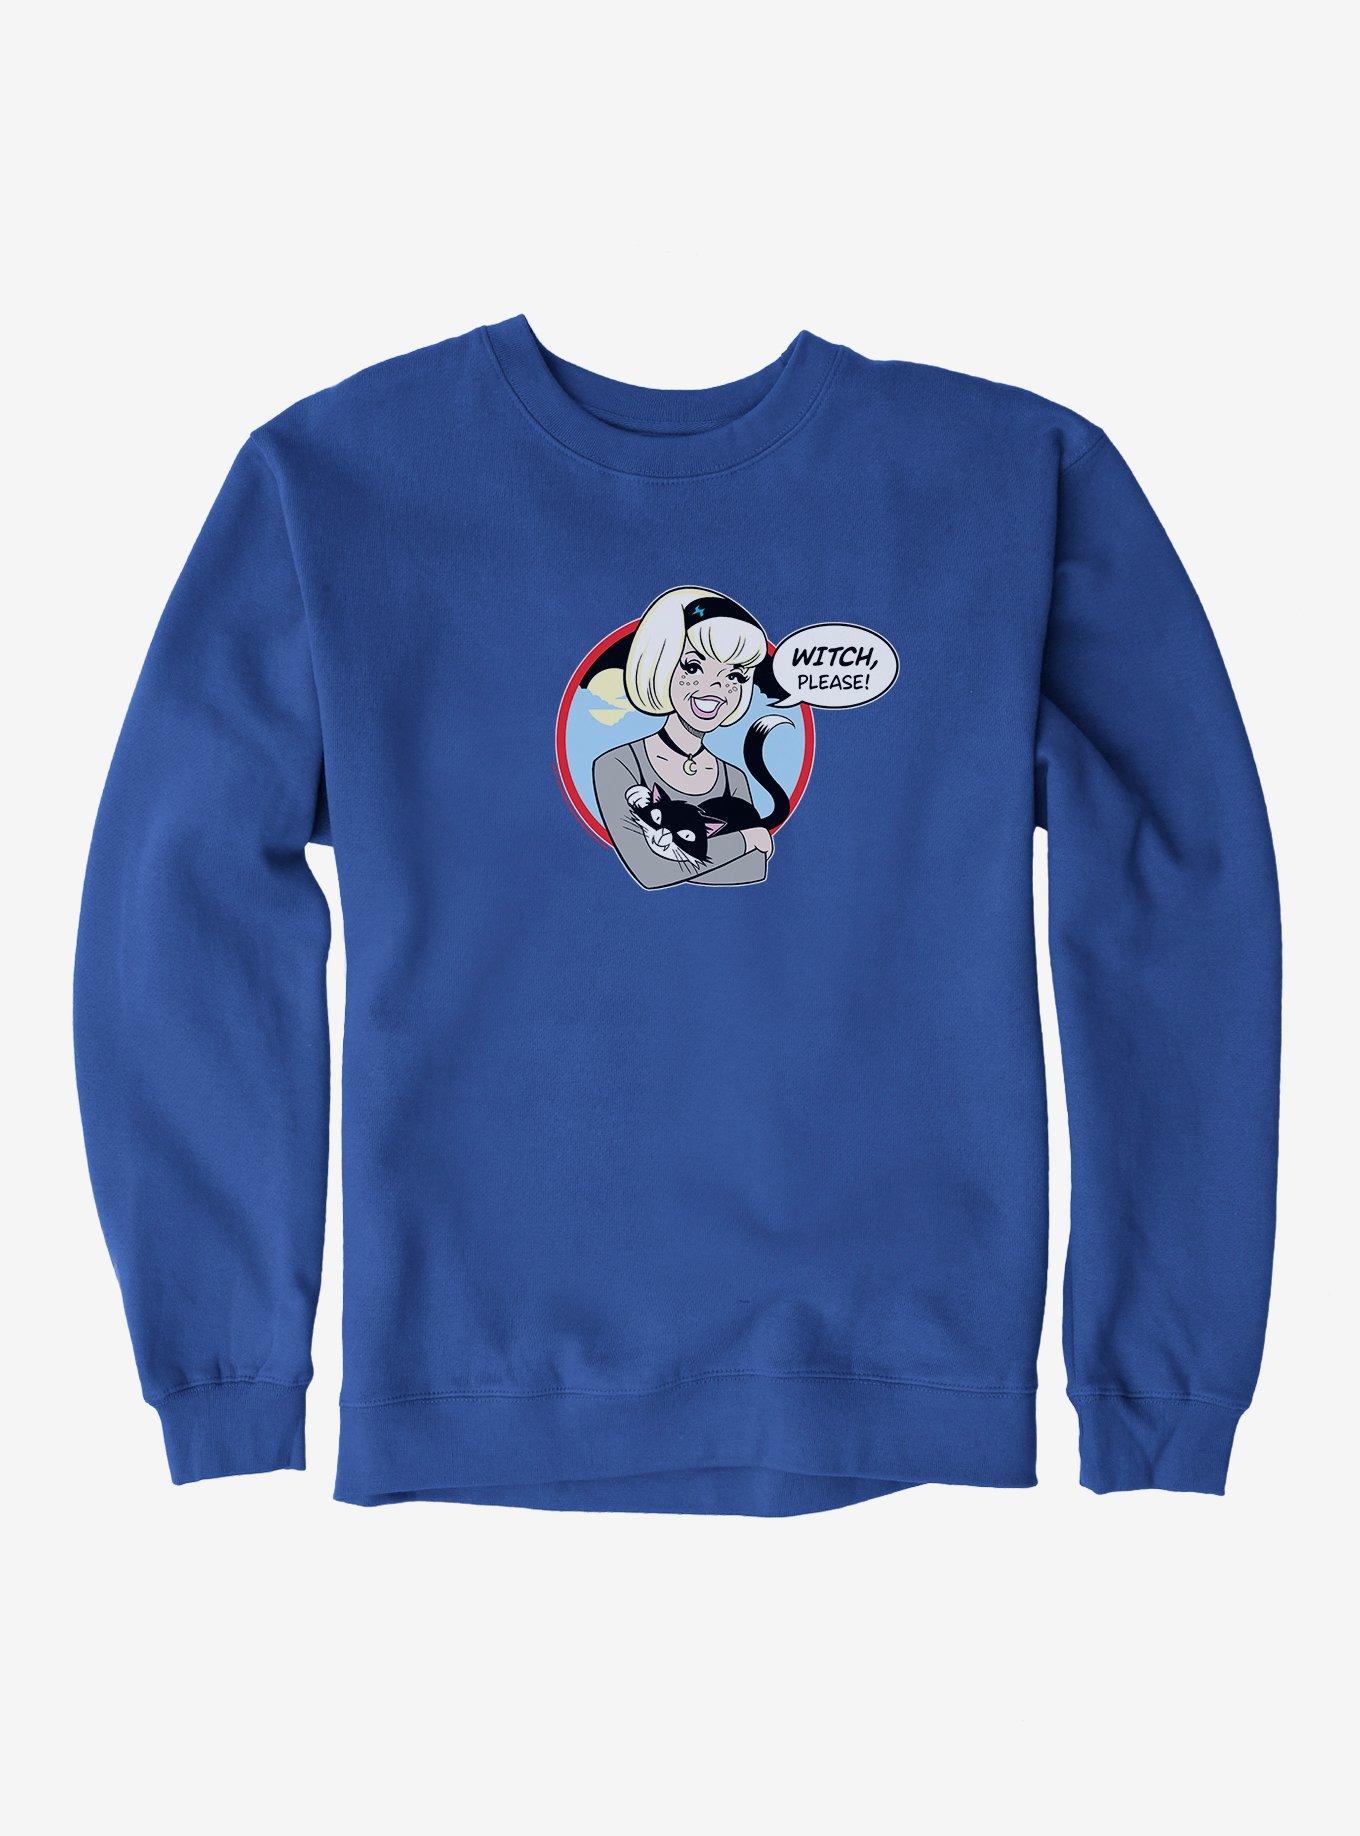 Archie Comics Chilling Adventures of Sabrina Witch Please Sweatshirt, ROYAL BLUE, hi-res